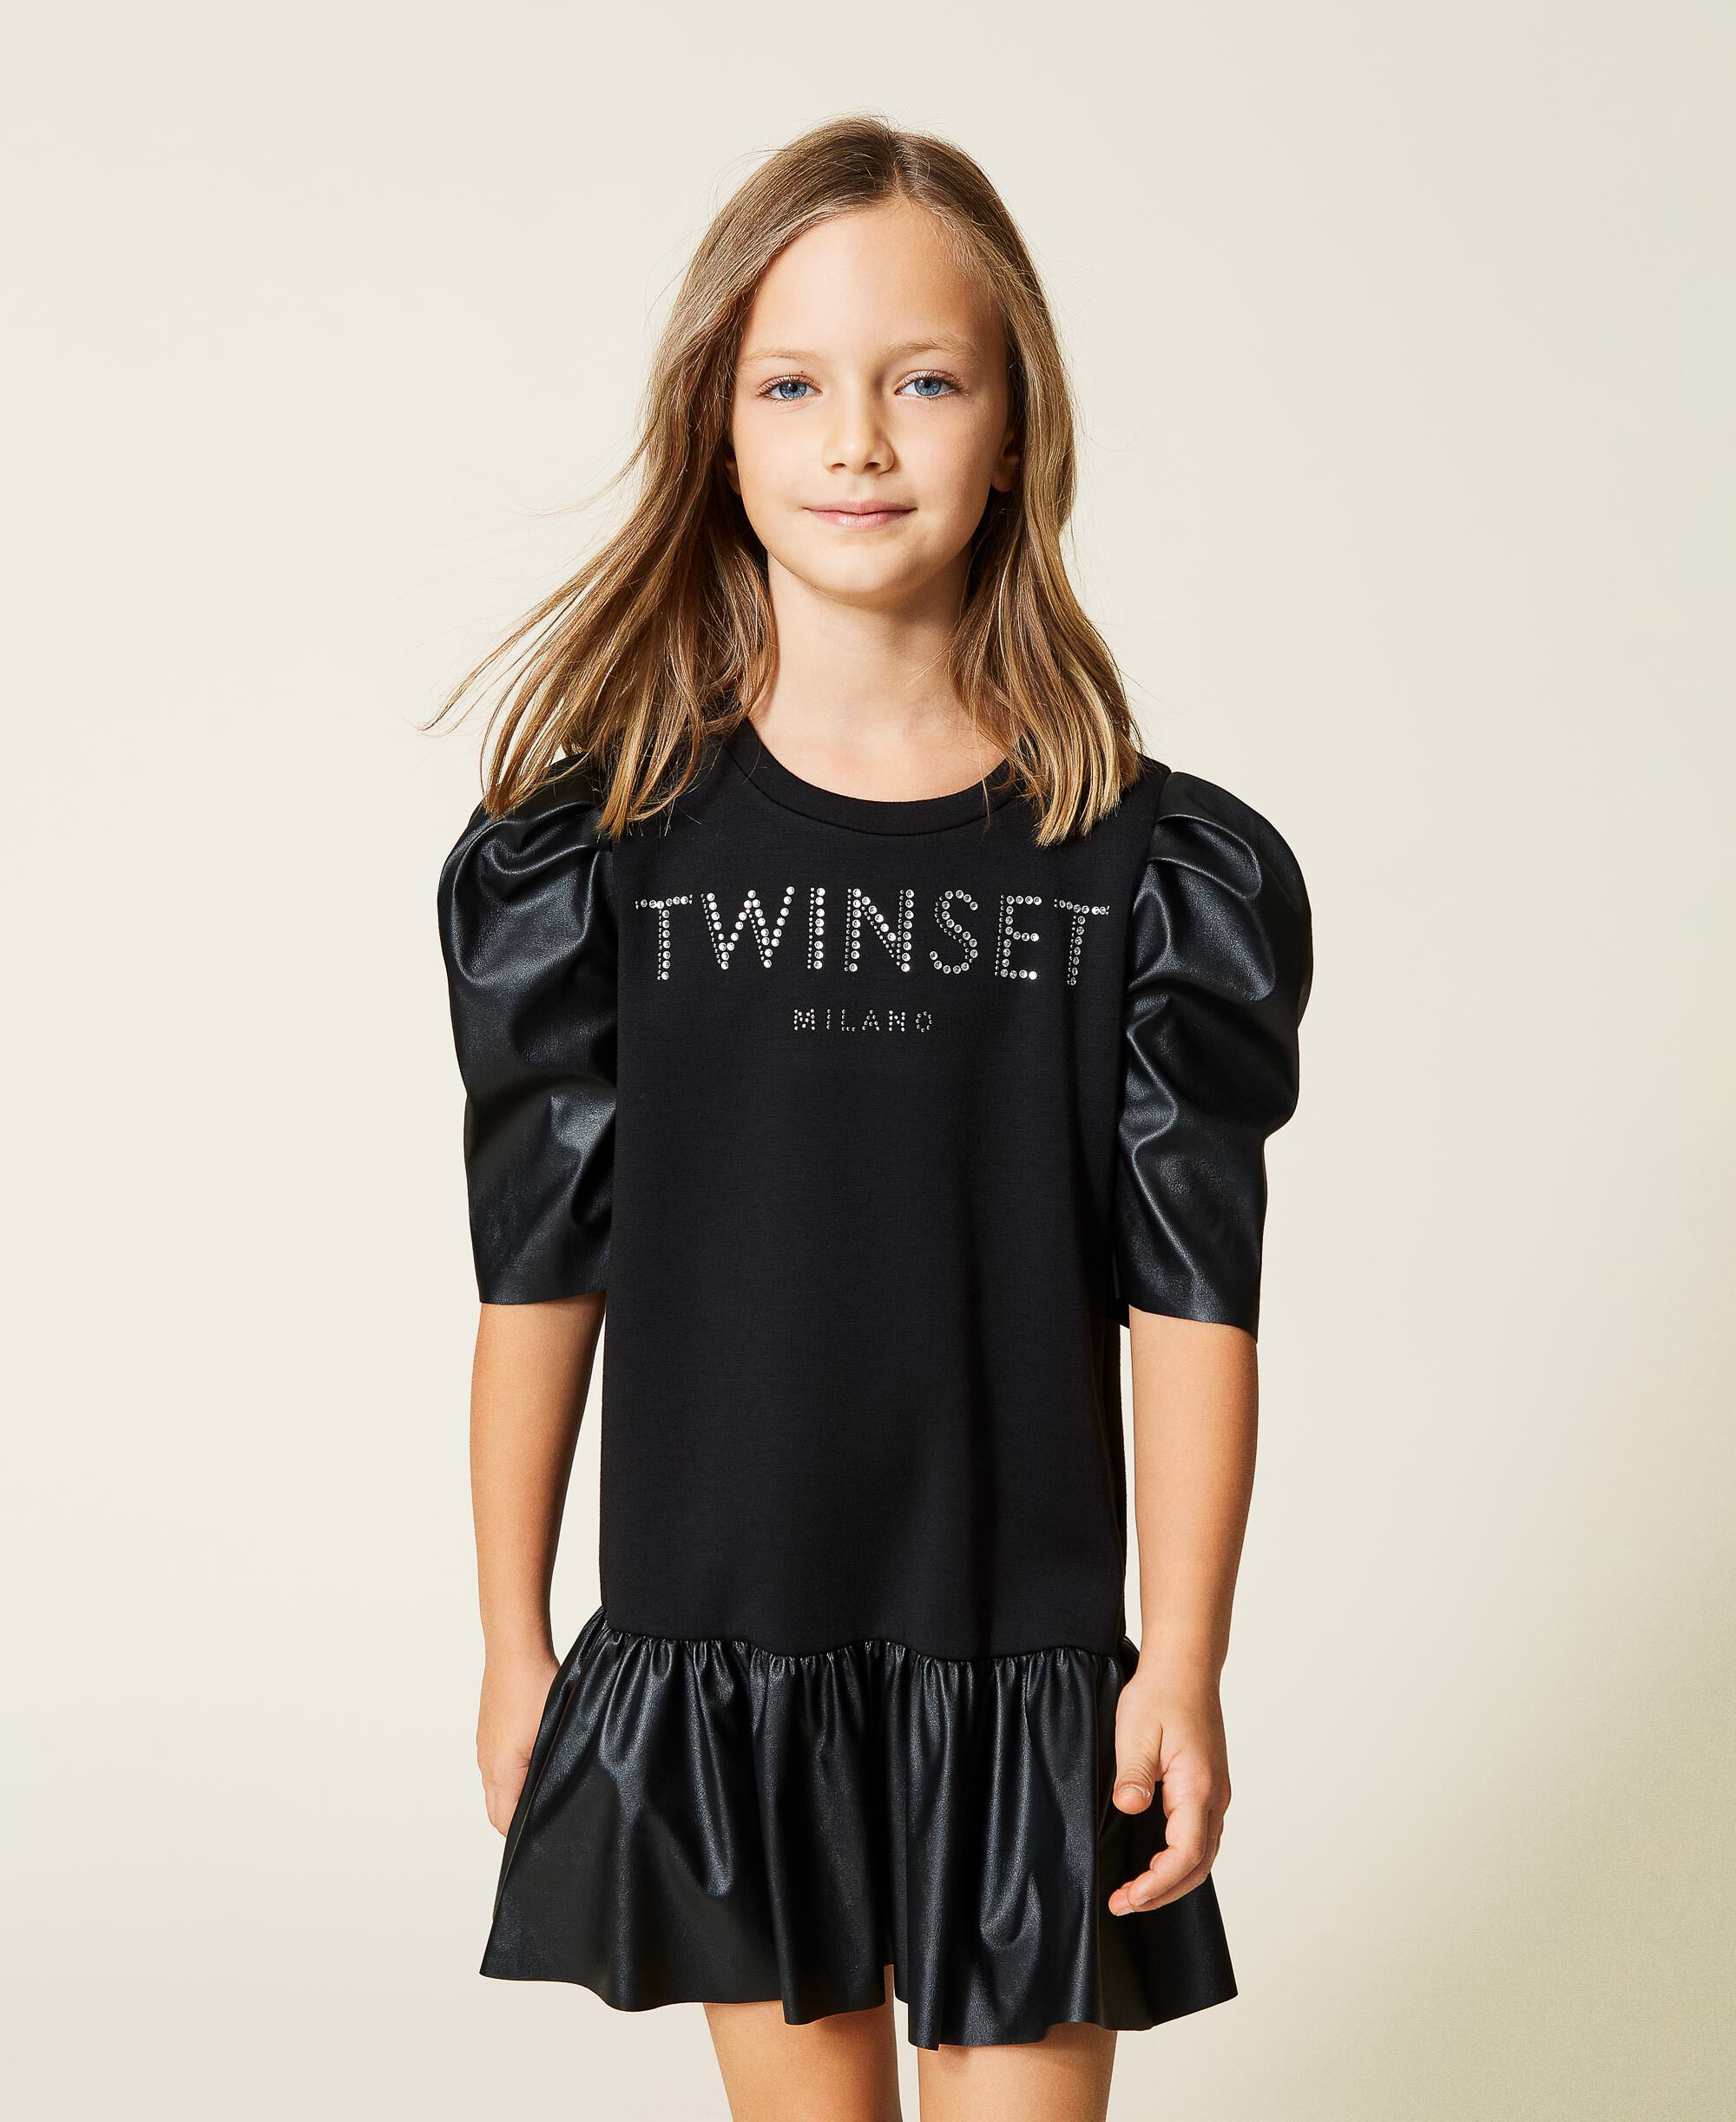 Scuba fabric dress with logo Child, Black | TWINSET Milano